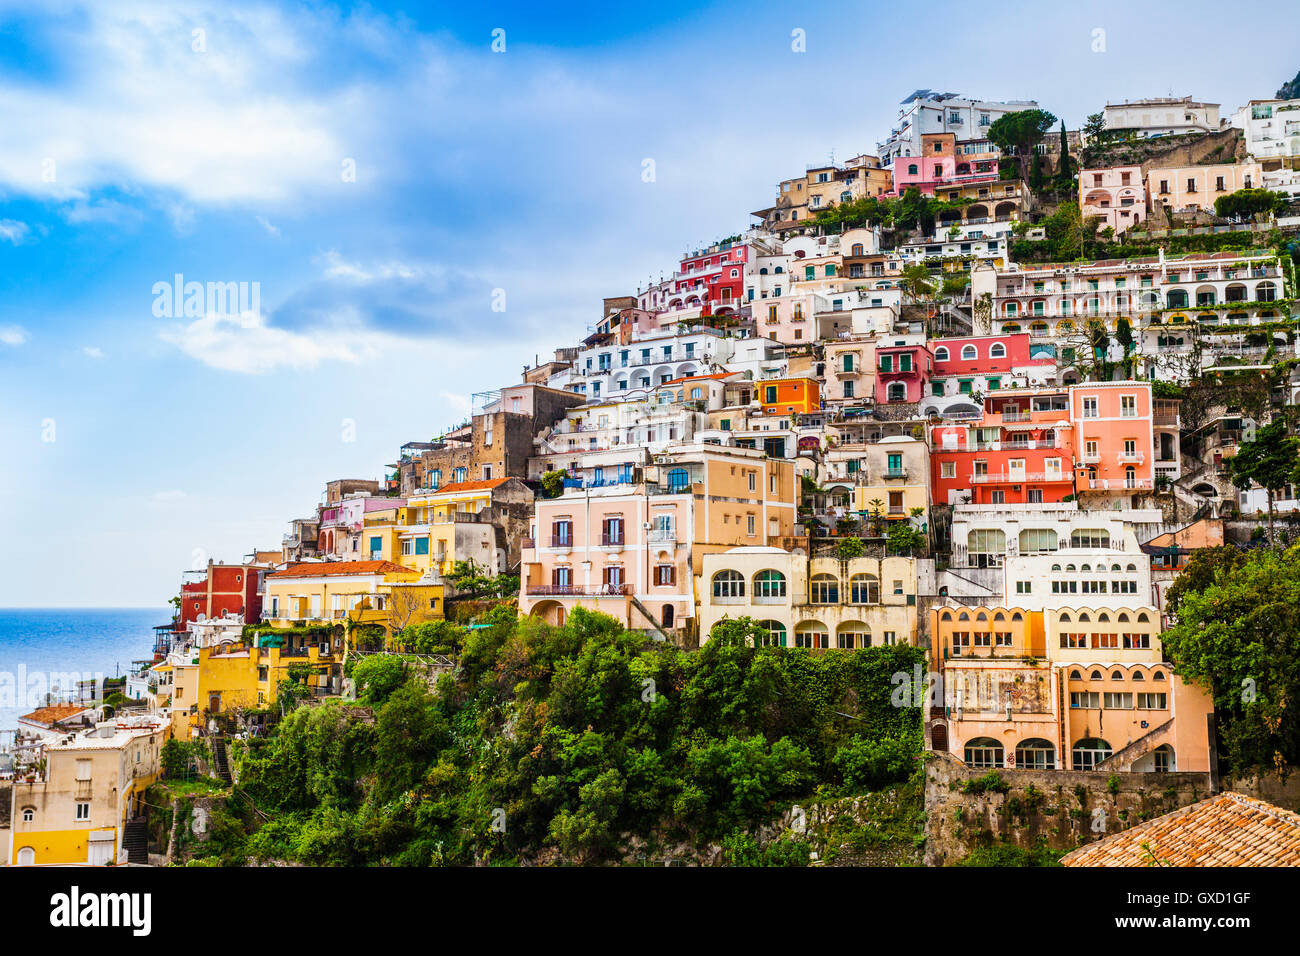 Cliff side buildings, Positano, Amalfi Coast, Italy Stock Photo